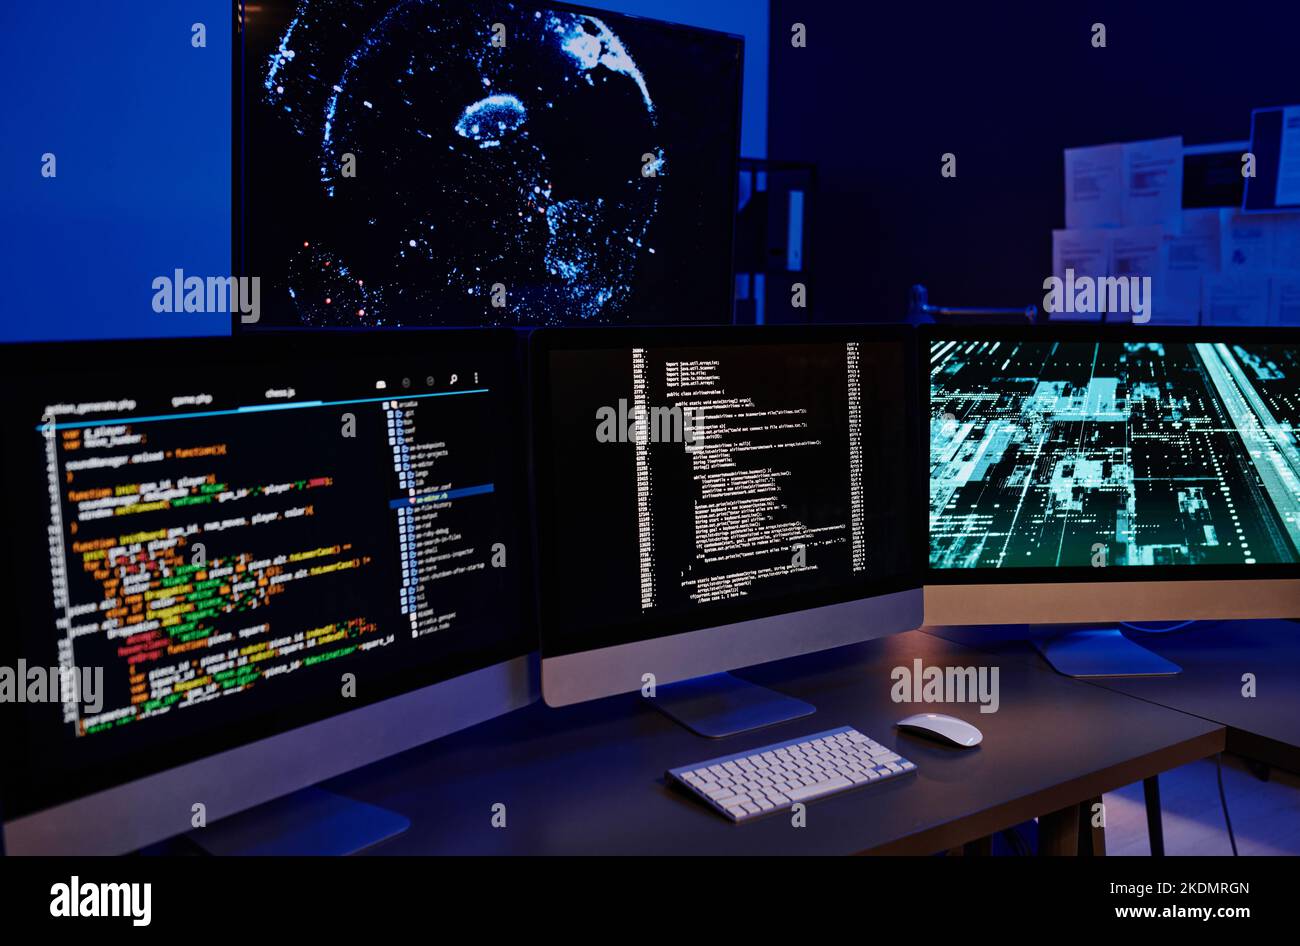 Fila de tres monitores de ordenador con datos codificados en pantallas situadas en lugares de orkplaces de varios ingenieros o programadores de TI modernos Foto de stock